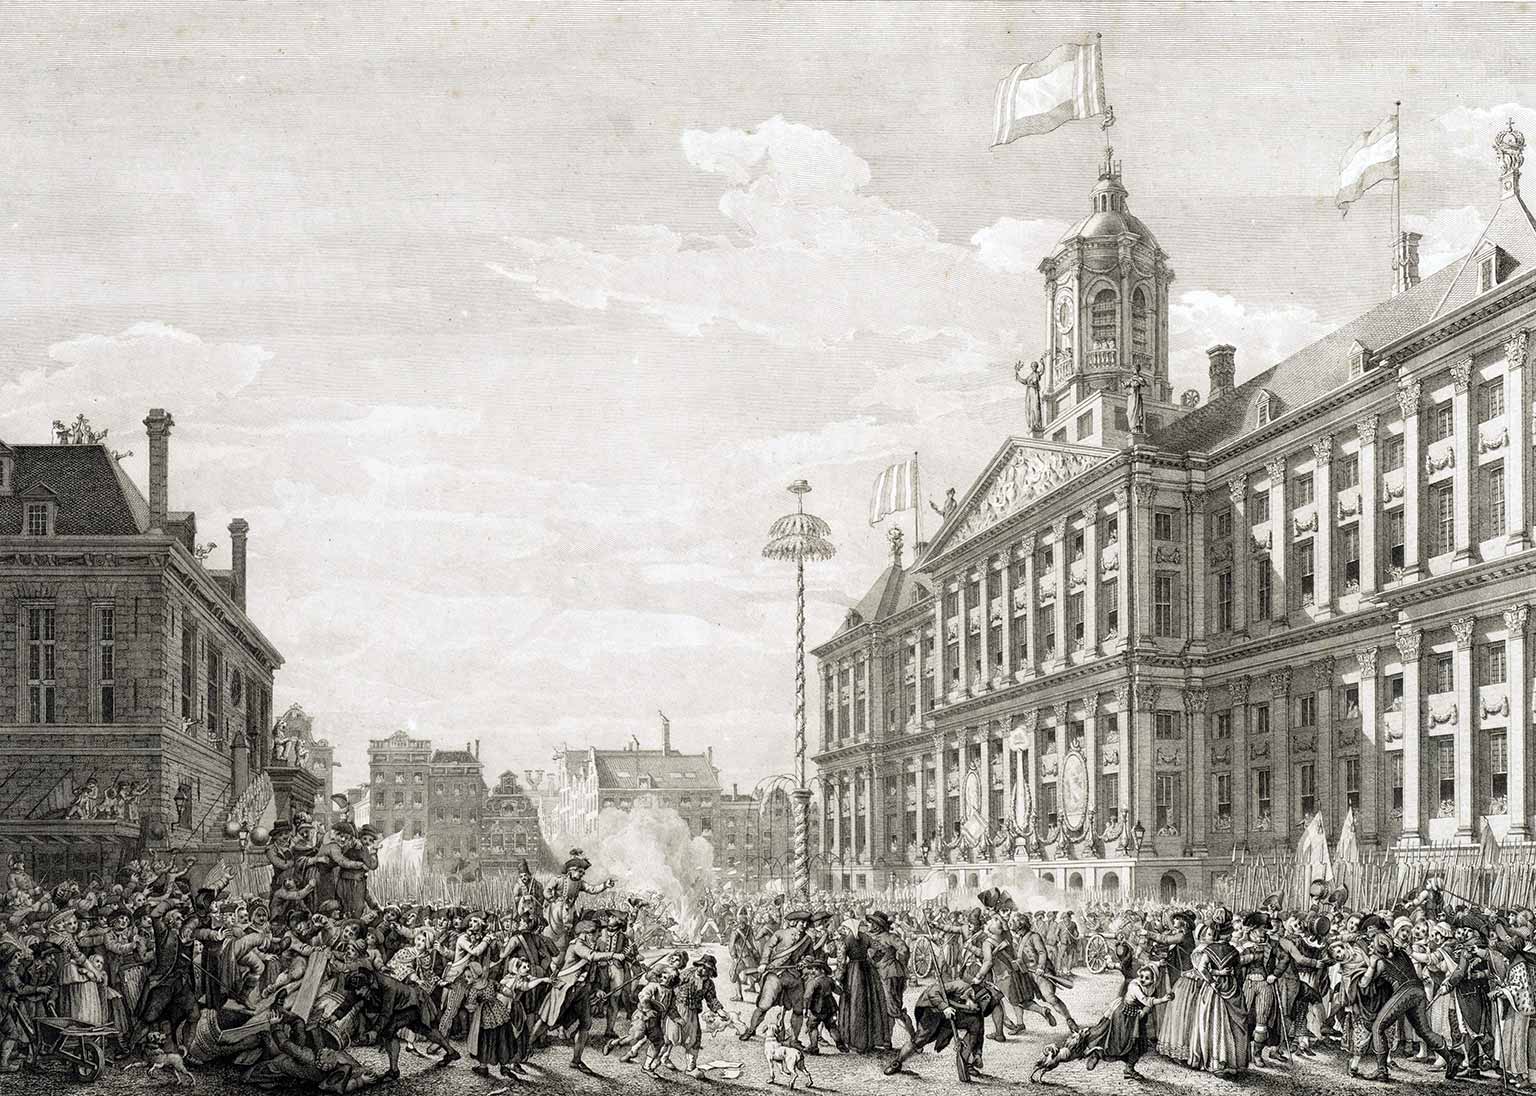 Festivities on Dam square, Amtserdam, in 1795, celebrating the alliance between France and the Batavian Republic